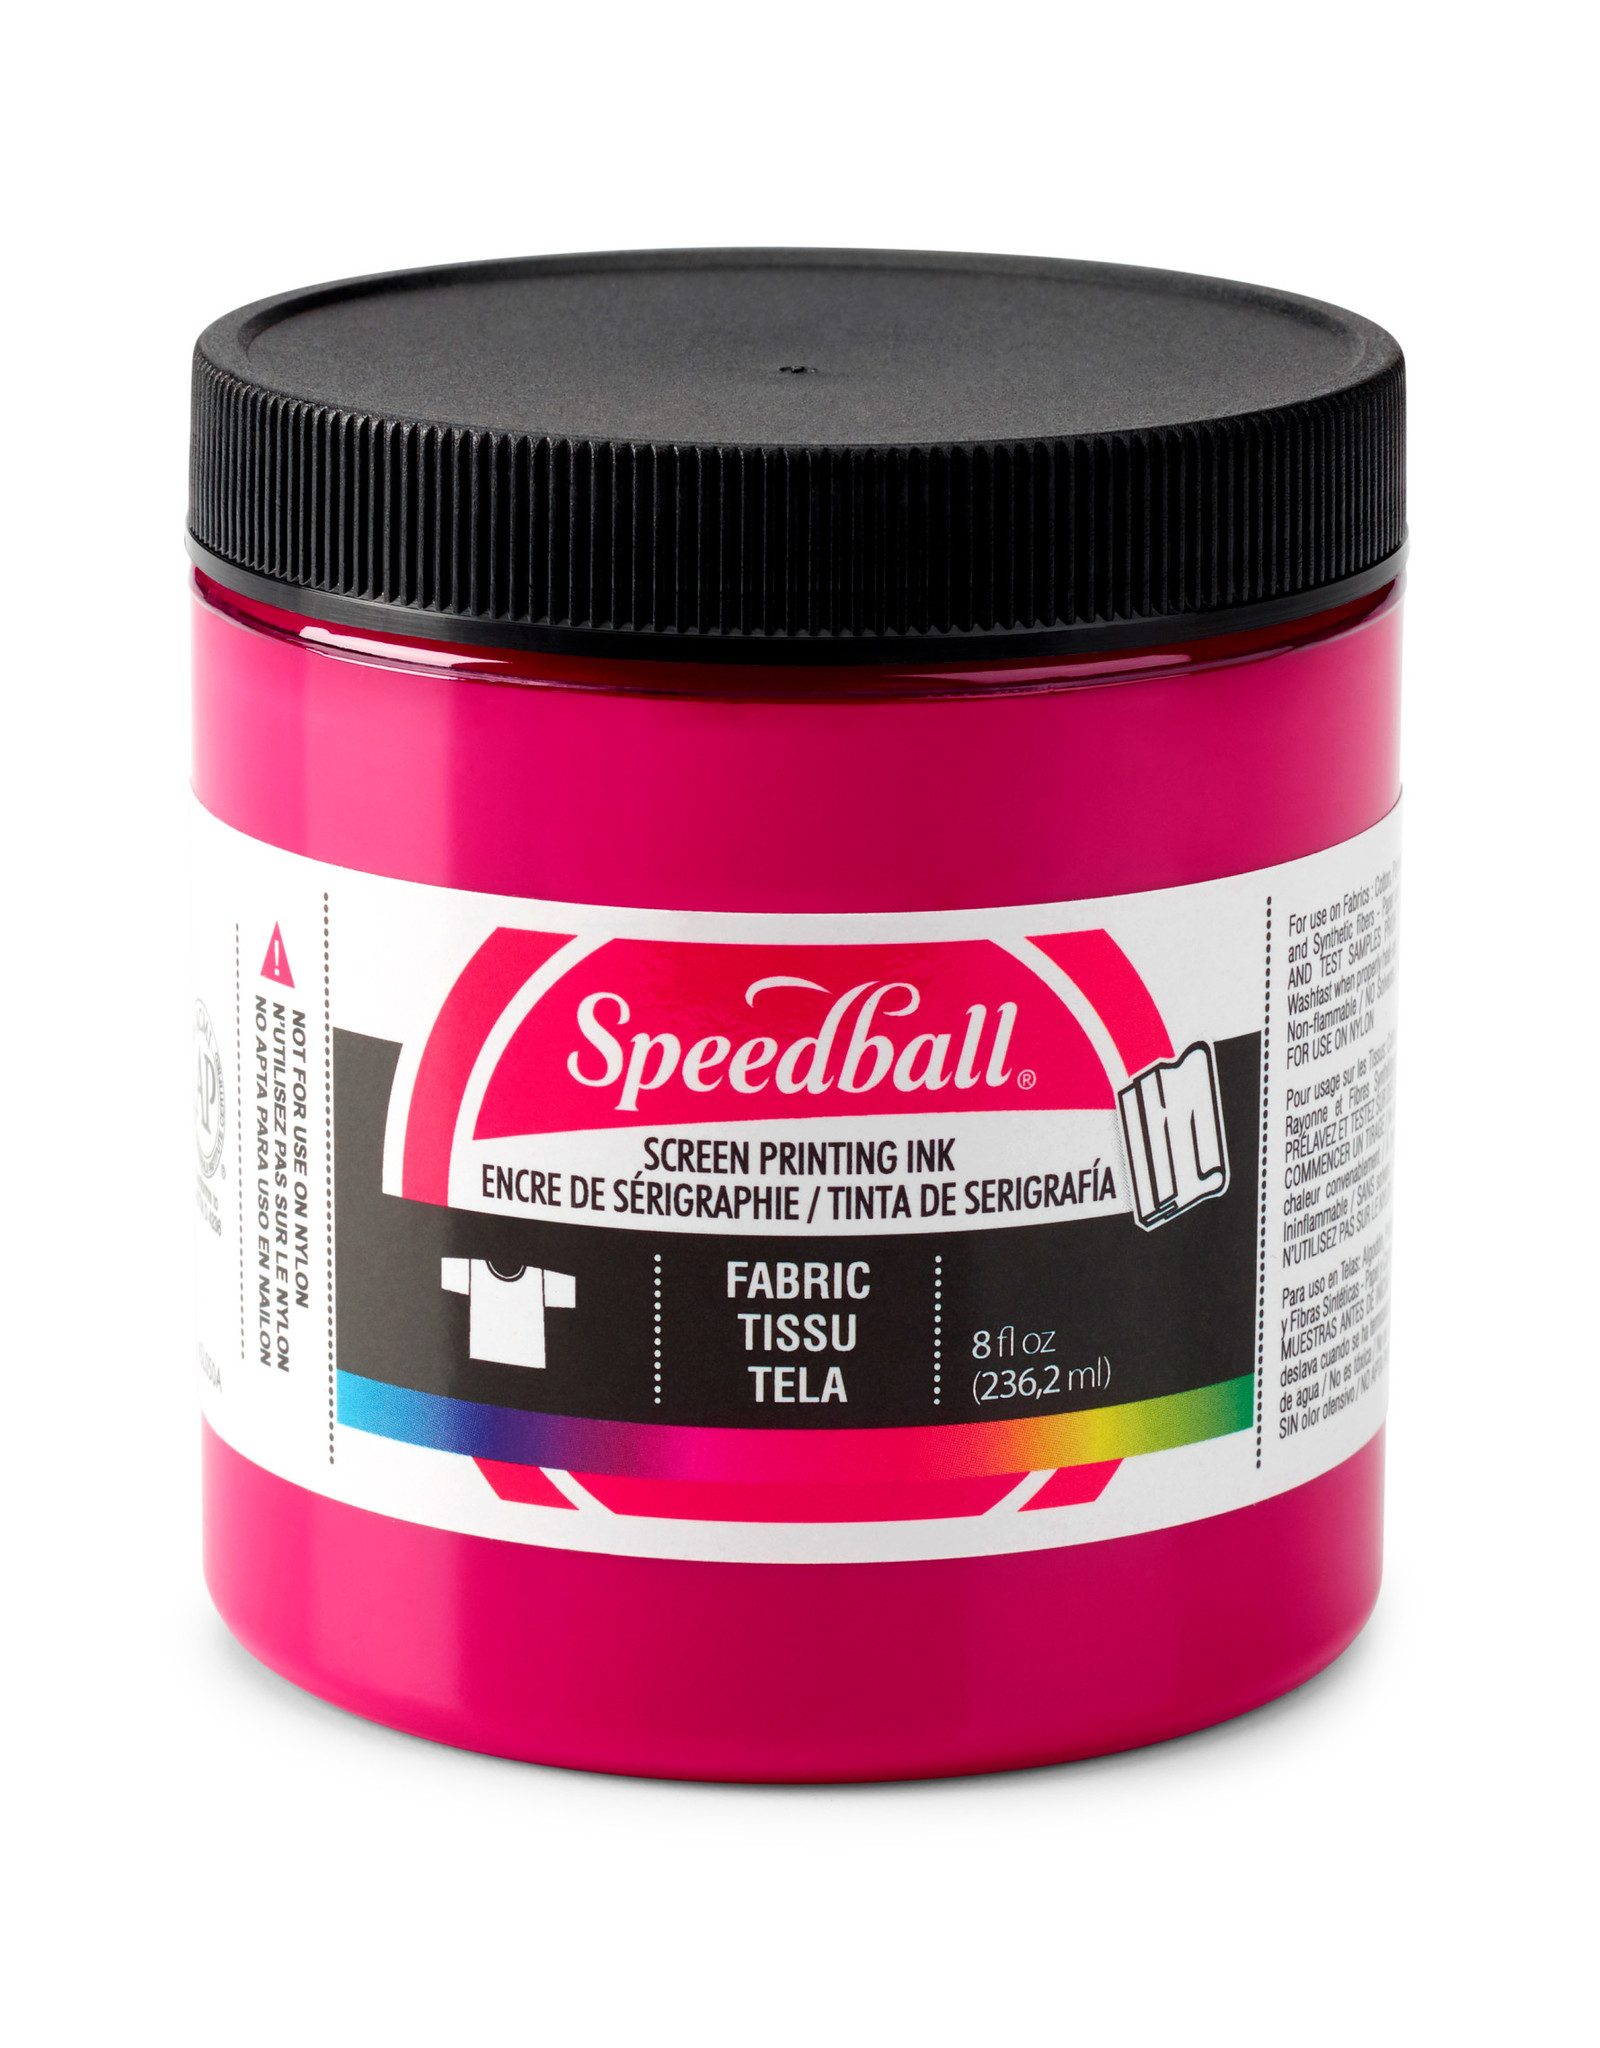 SPEEDBALL ART PRODUCTS Speedball Fabric Screen Printing Ink, Process Magenta, 8oz